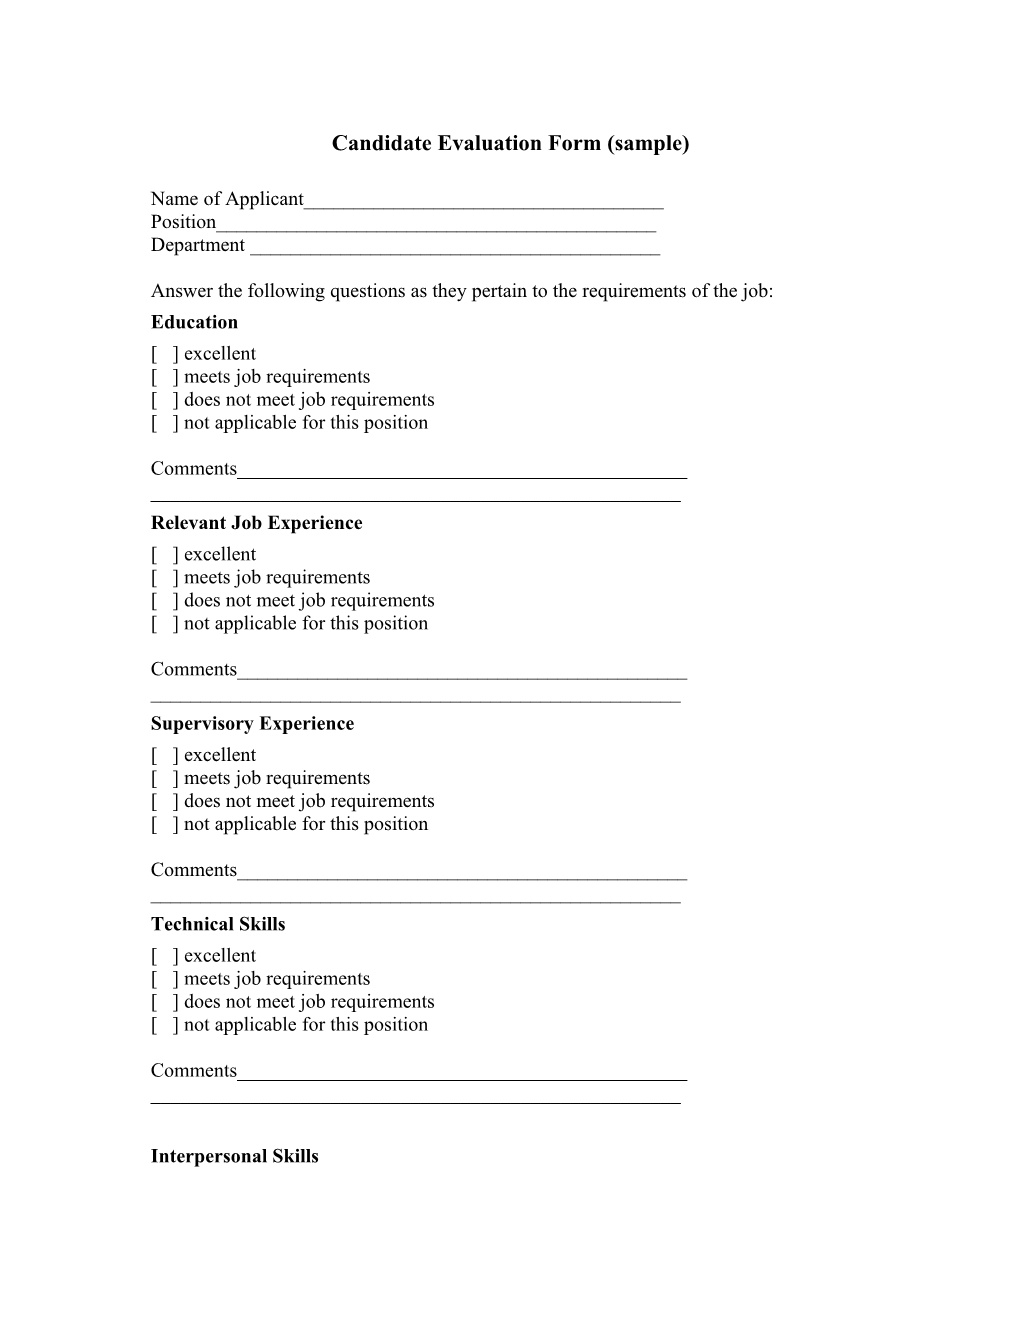 Candidate Evaluation Form (Sample)